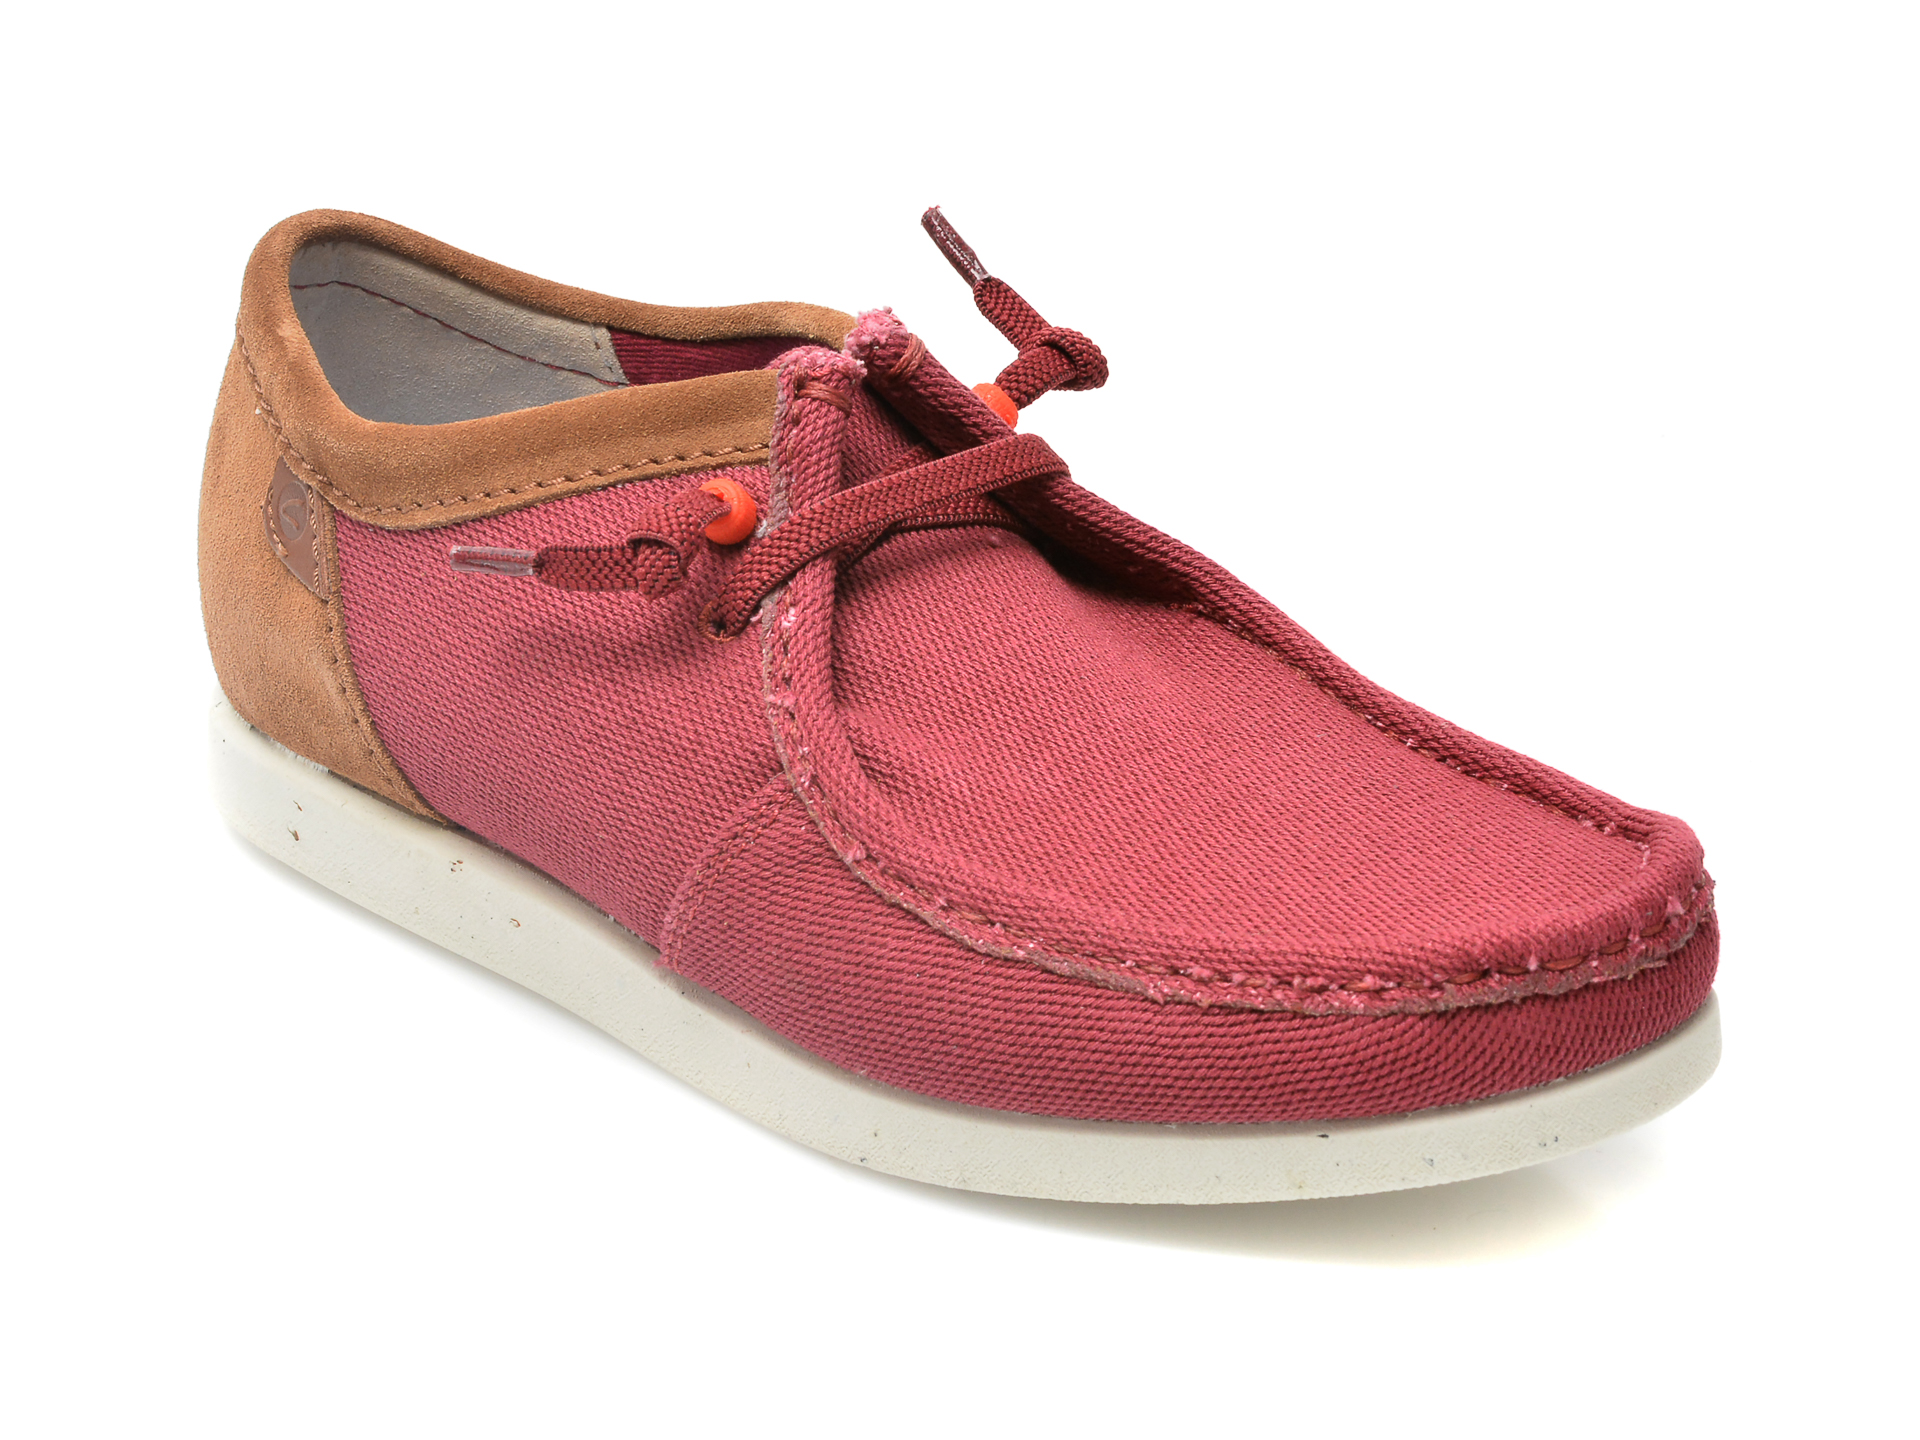 Pantofi CLARKS rosii, SHALIMO, din material textil Clarks